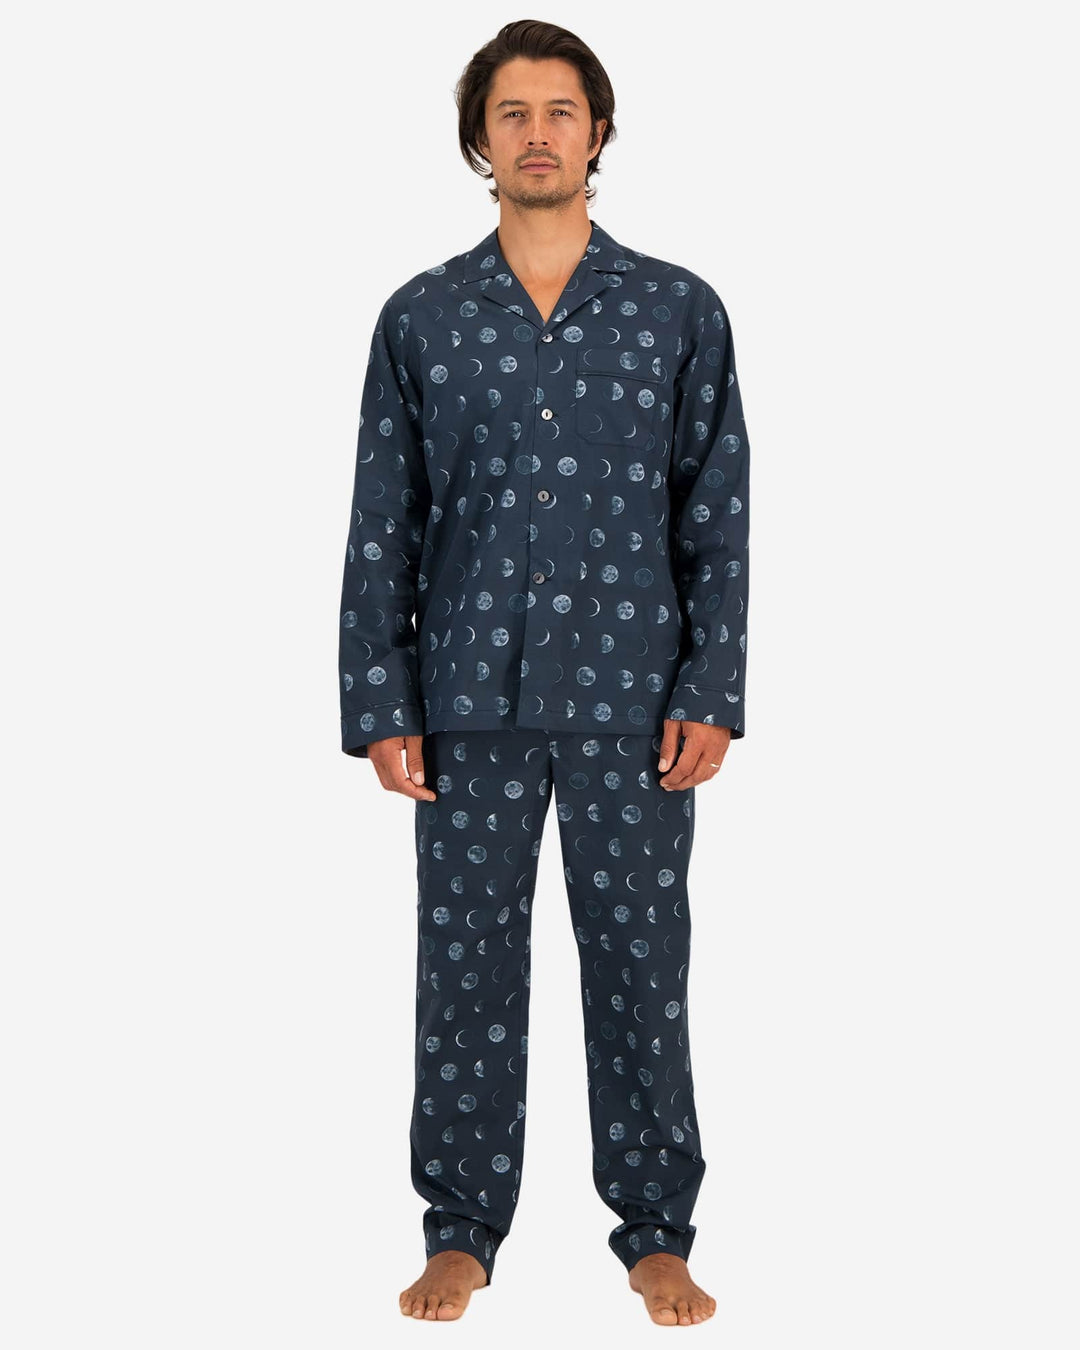 Men's Long Pyjamas Set - Moons